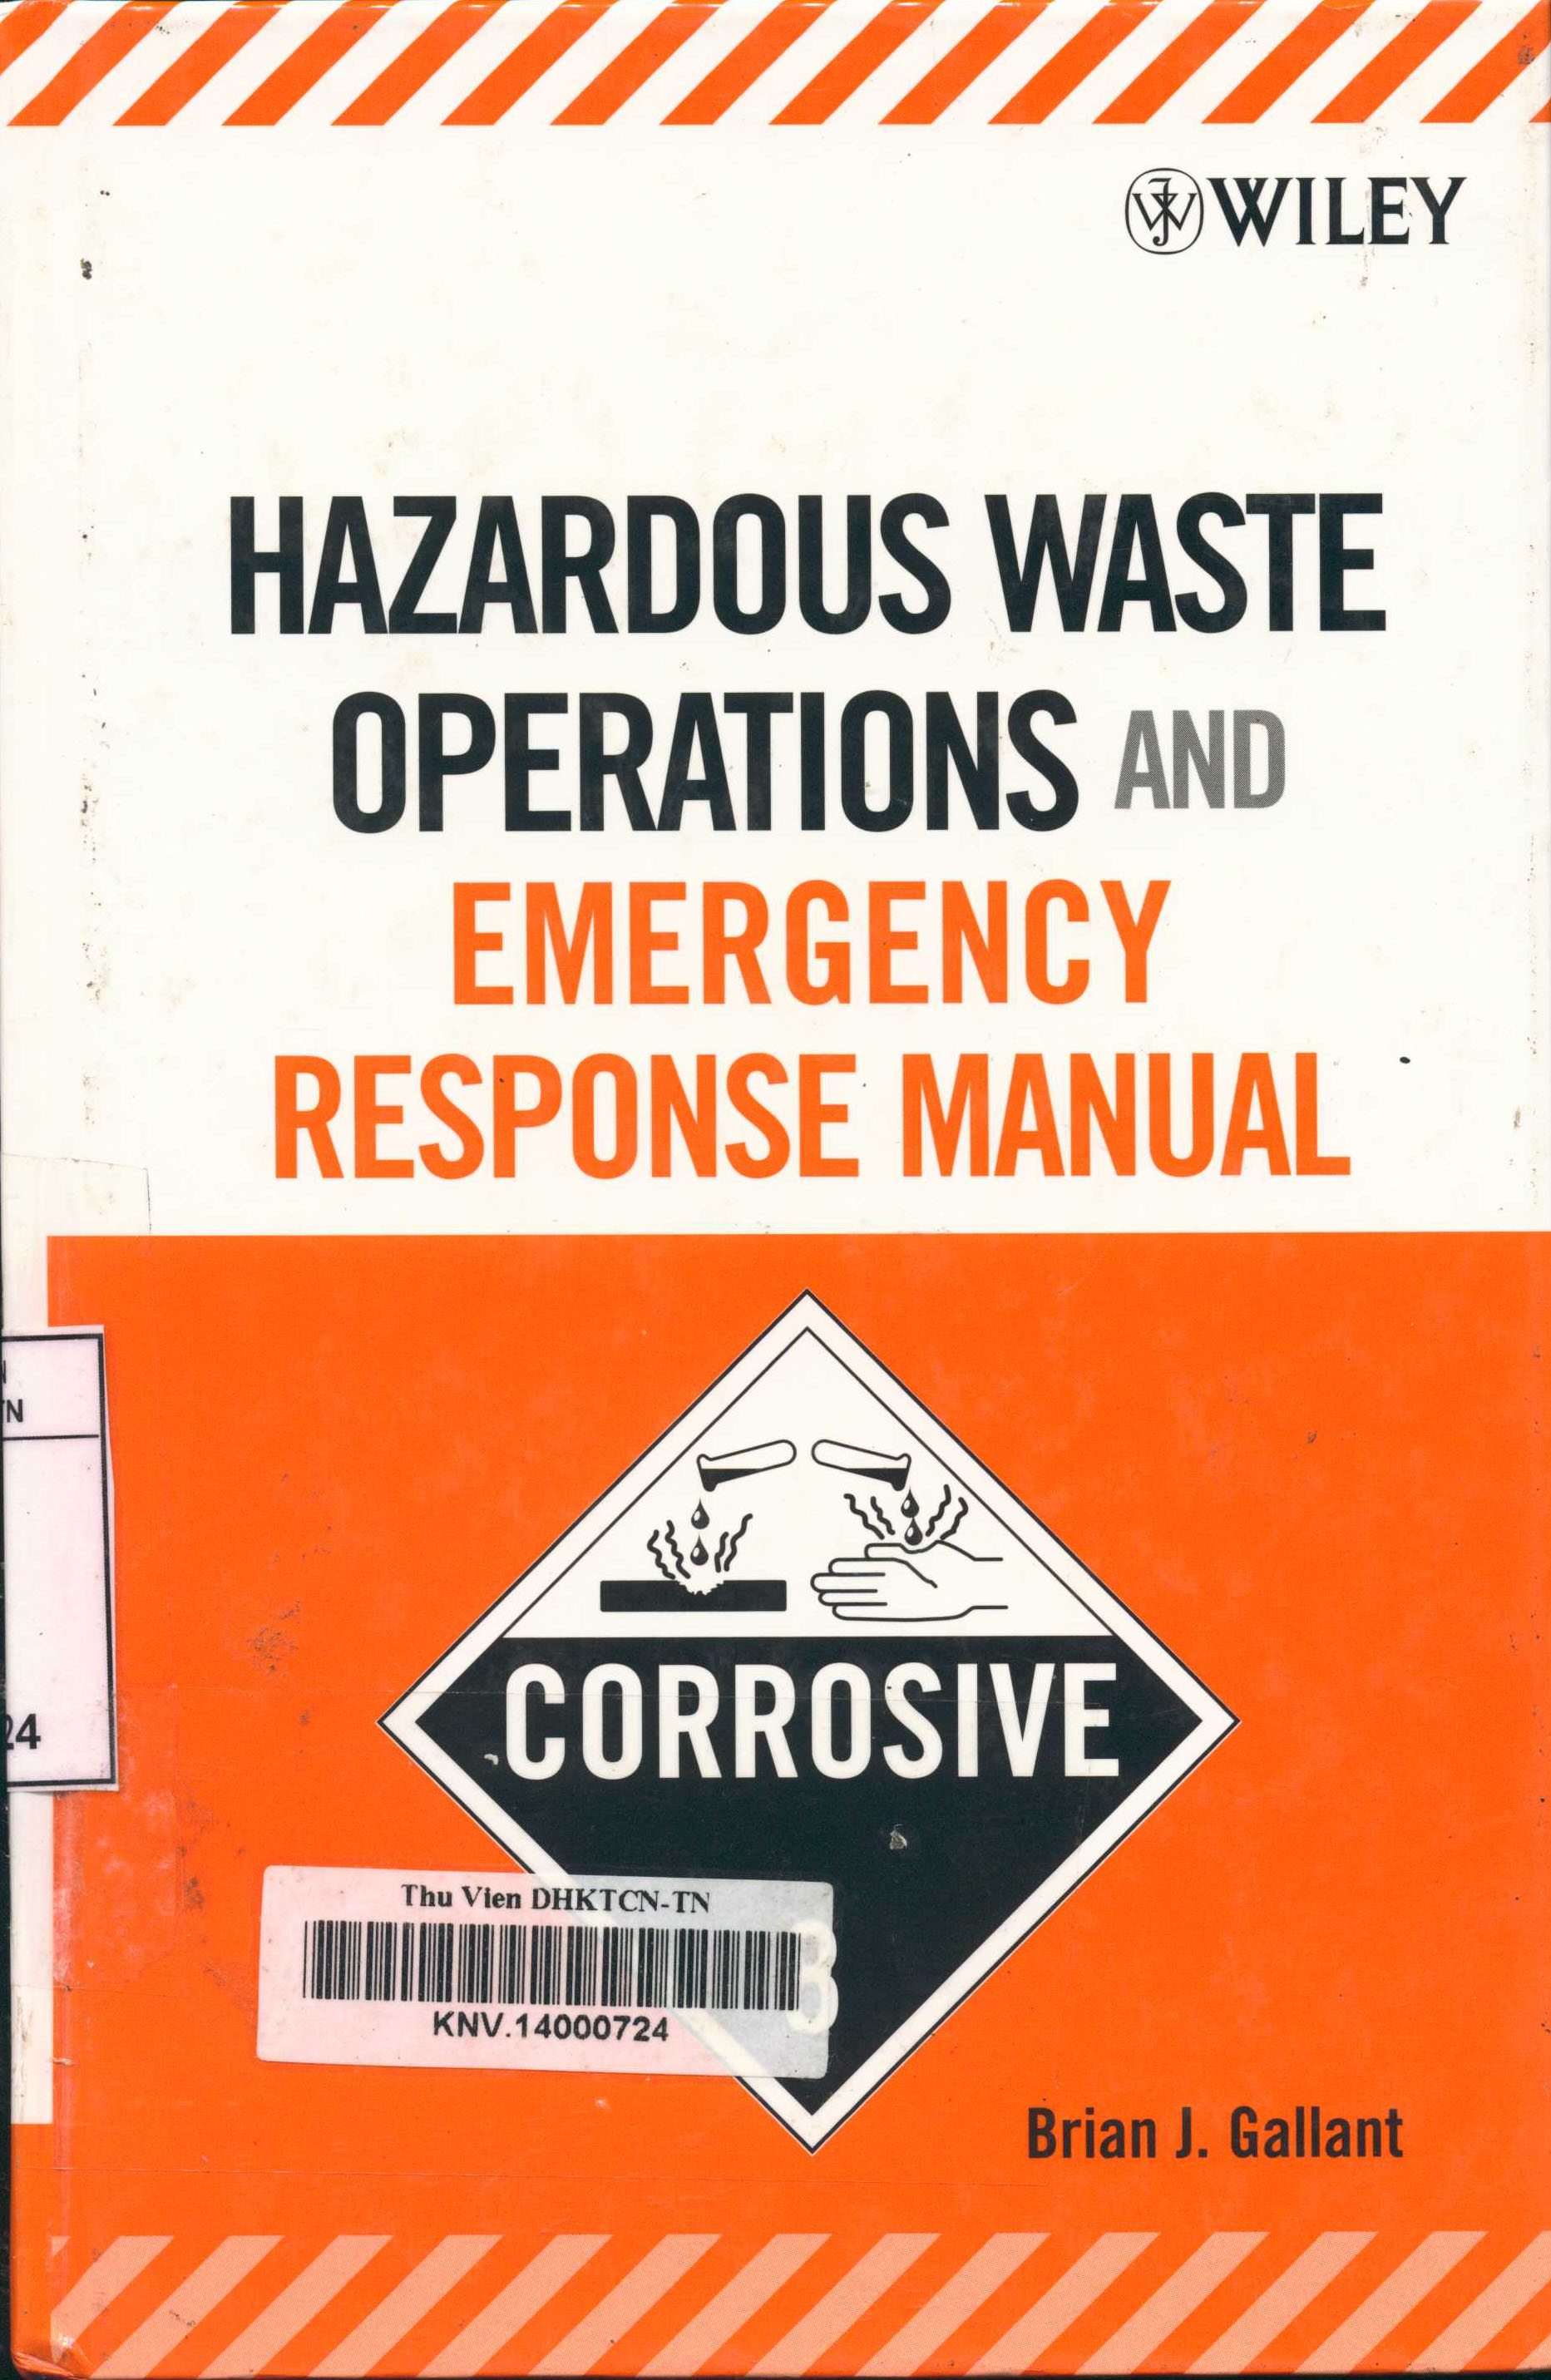 Hazardous waste operations and emergency response manual